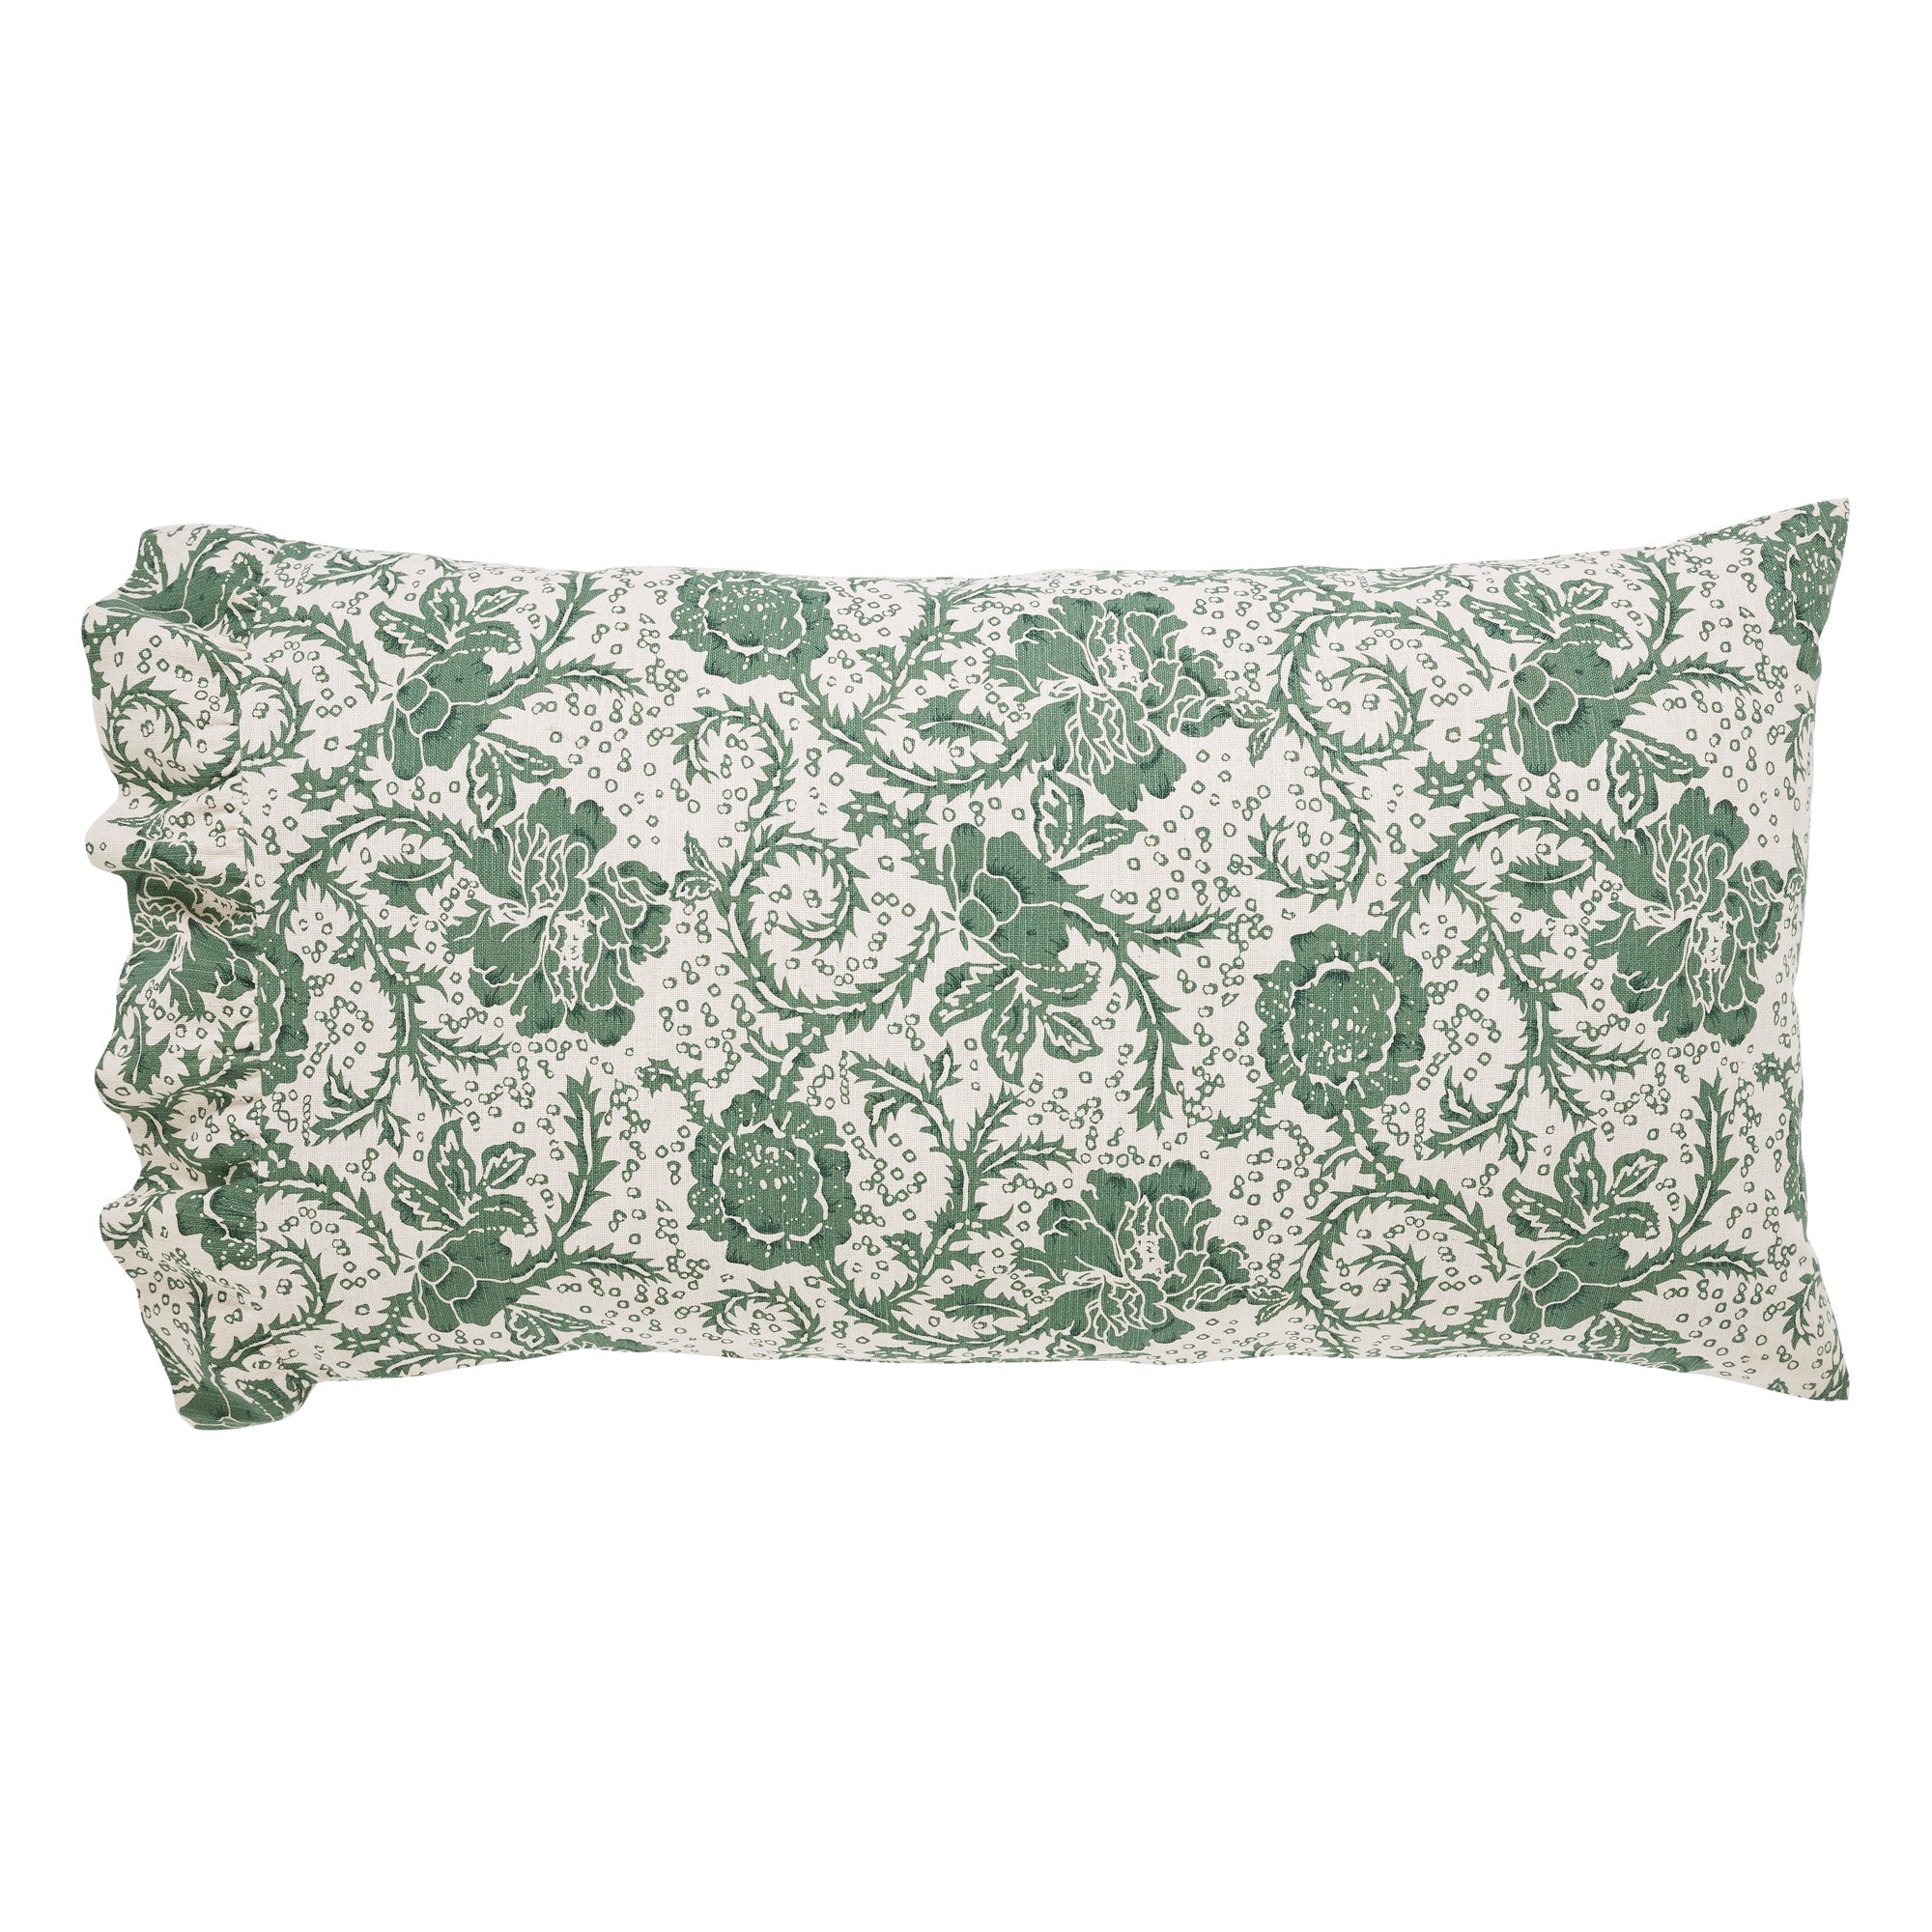 Dorset Green Floral Ruffled King Pillow Case Set of 2 21x36+4 VHC Brands